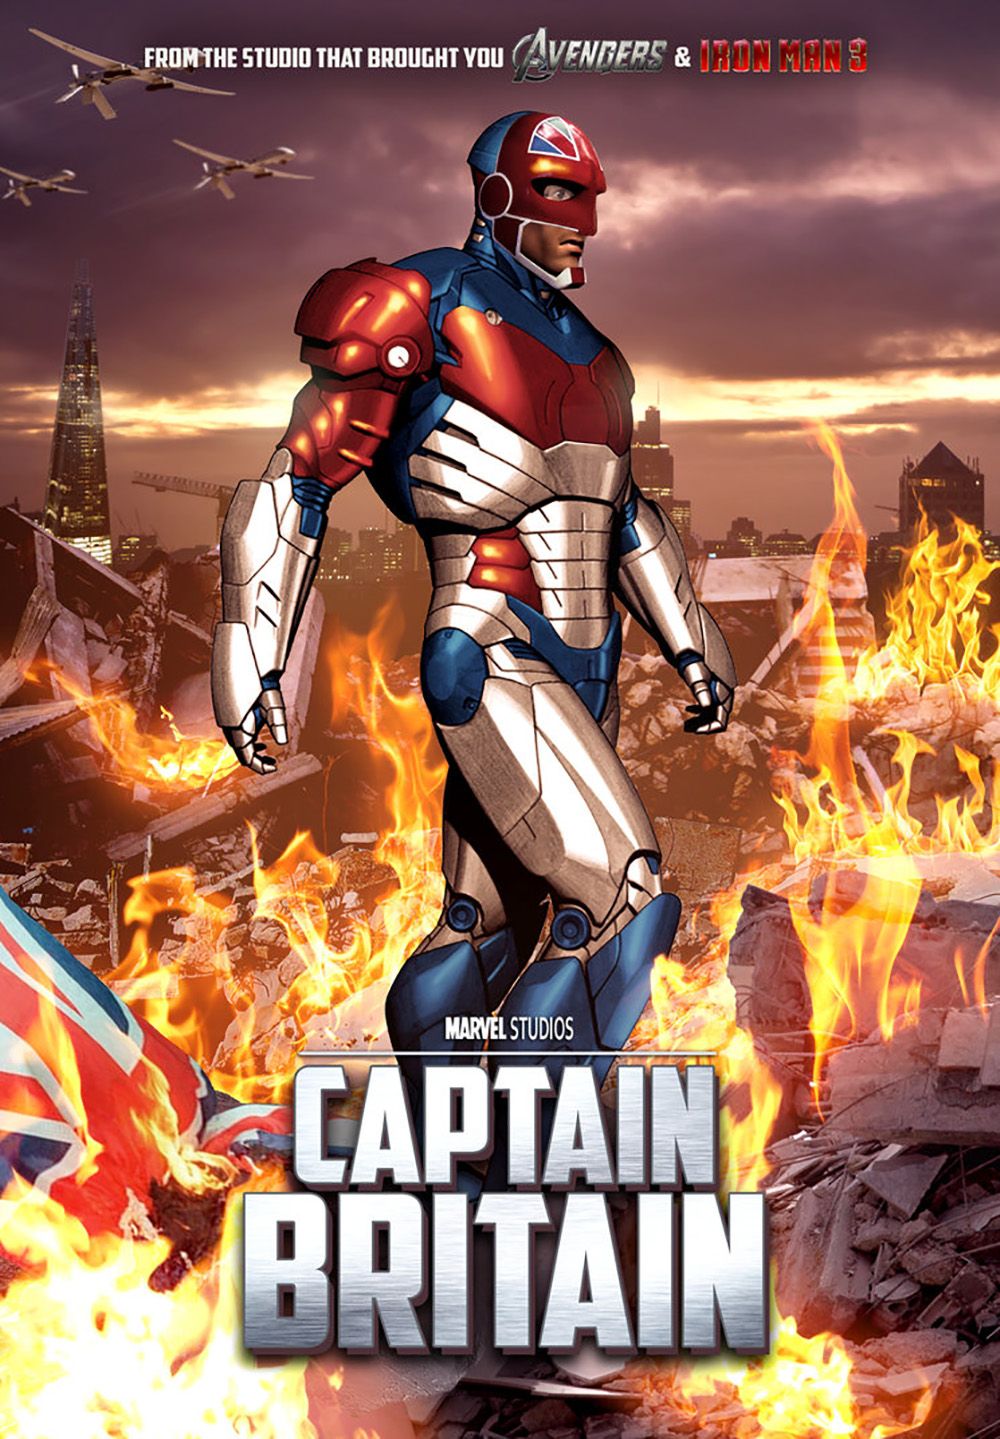 Captain Britain movie fan poster